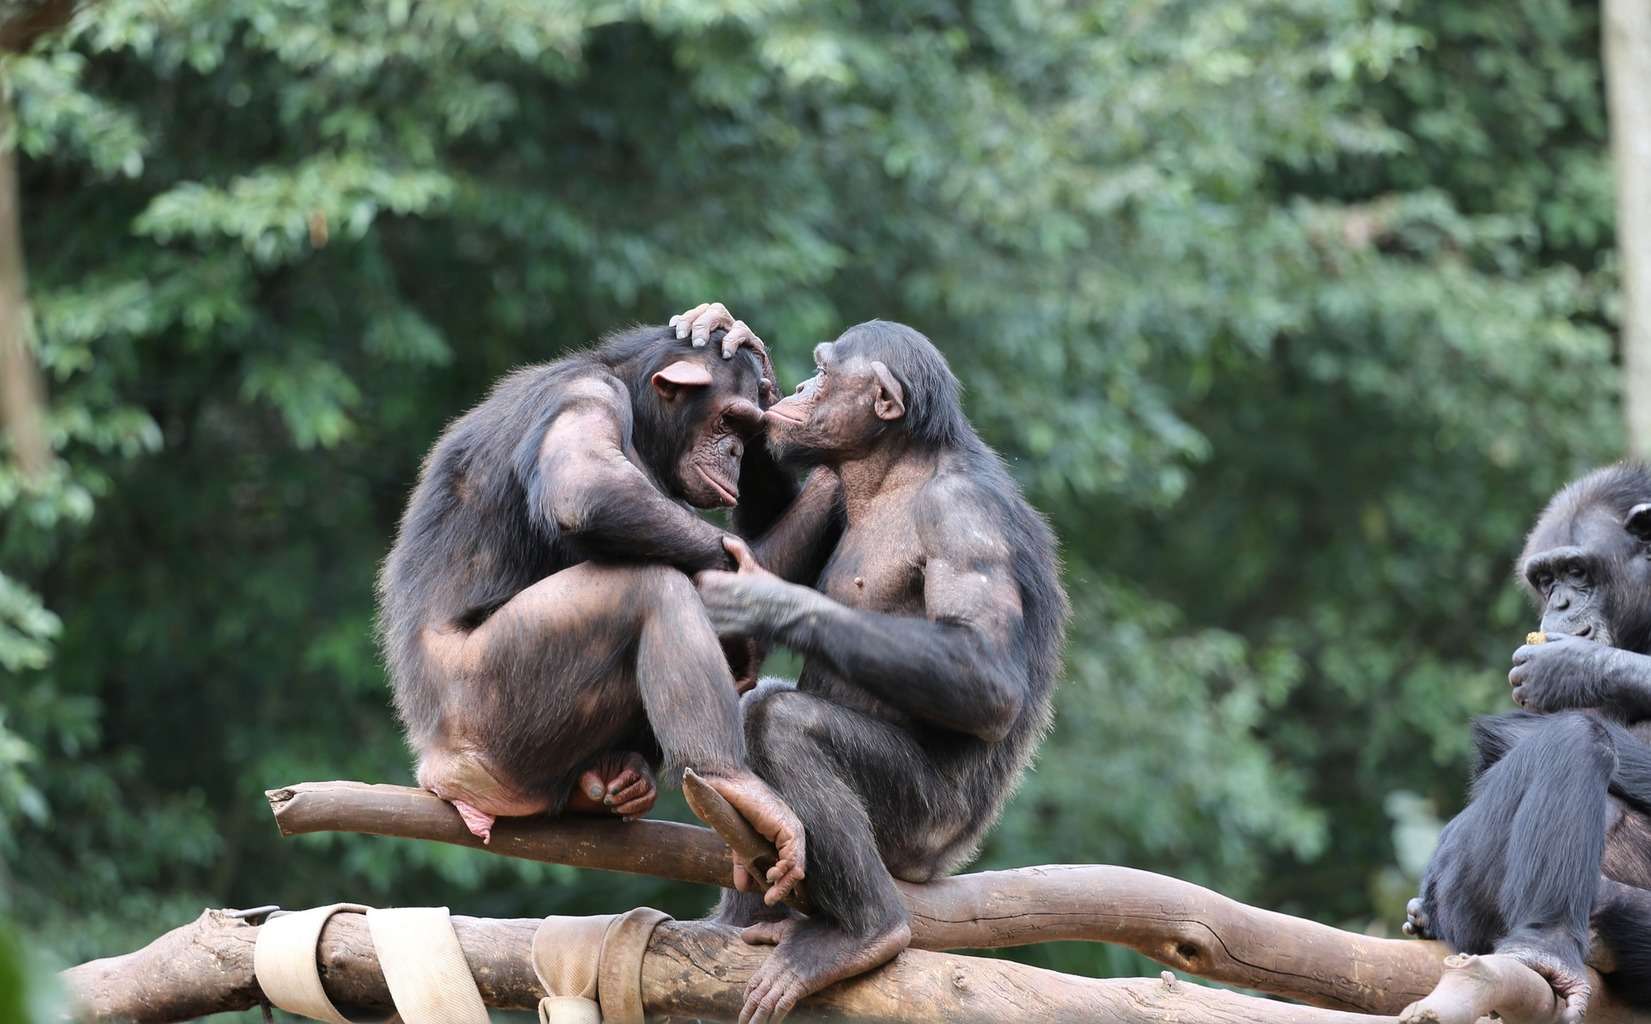 altruism in chimpanzees